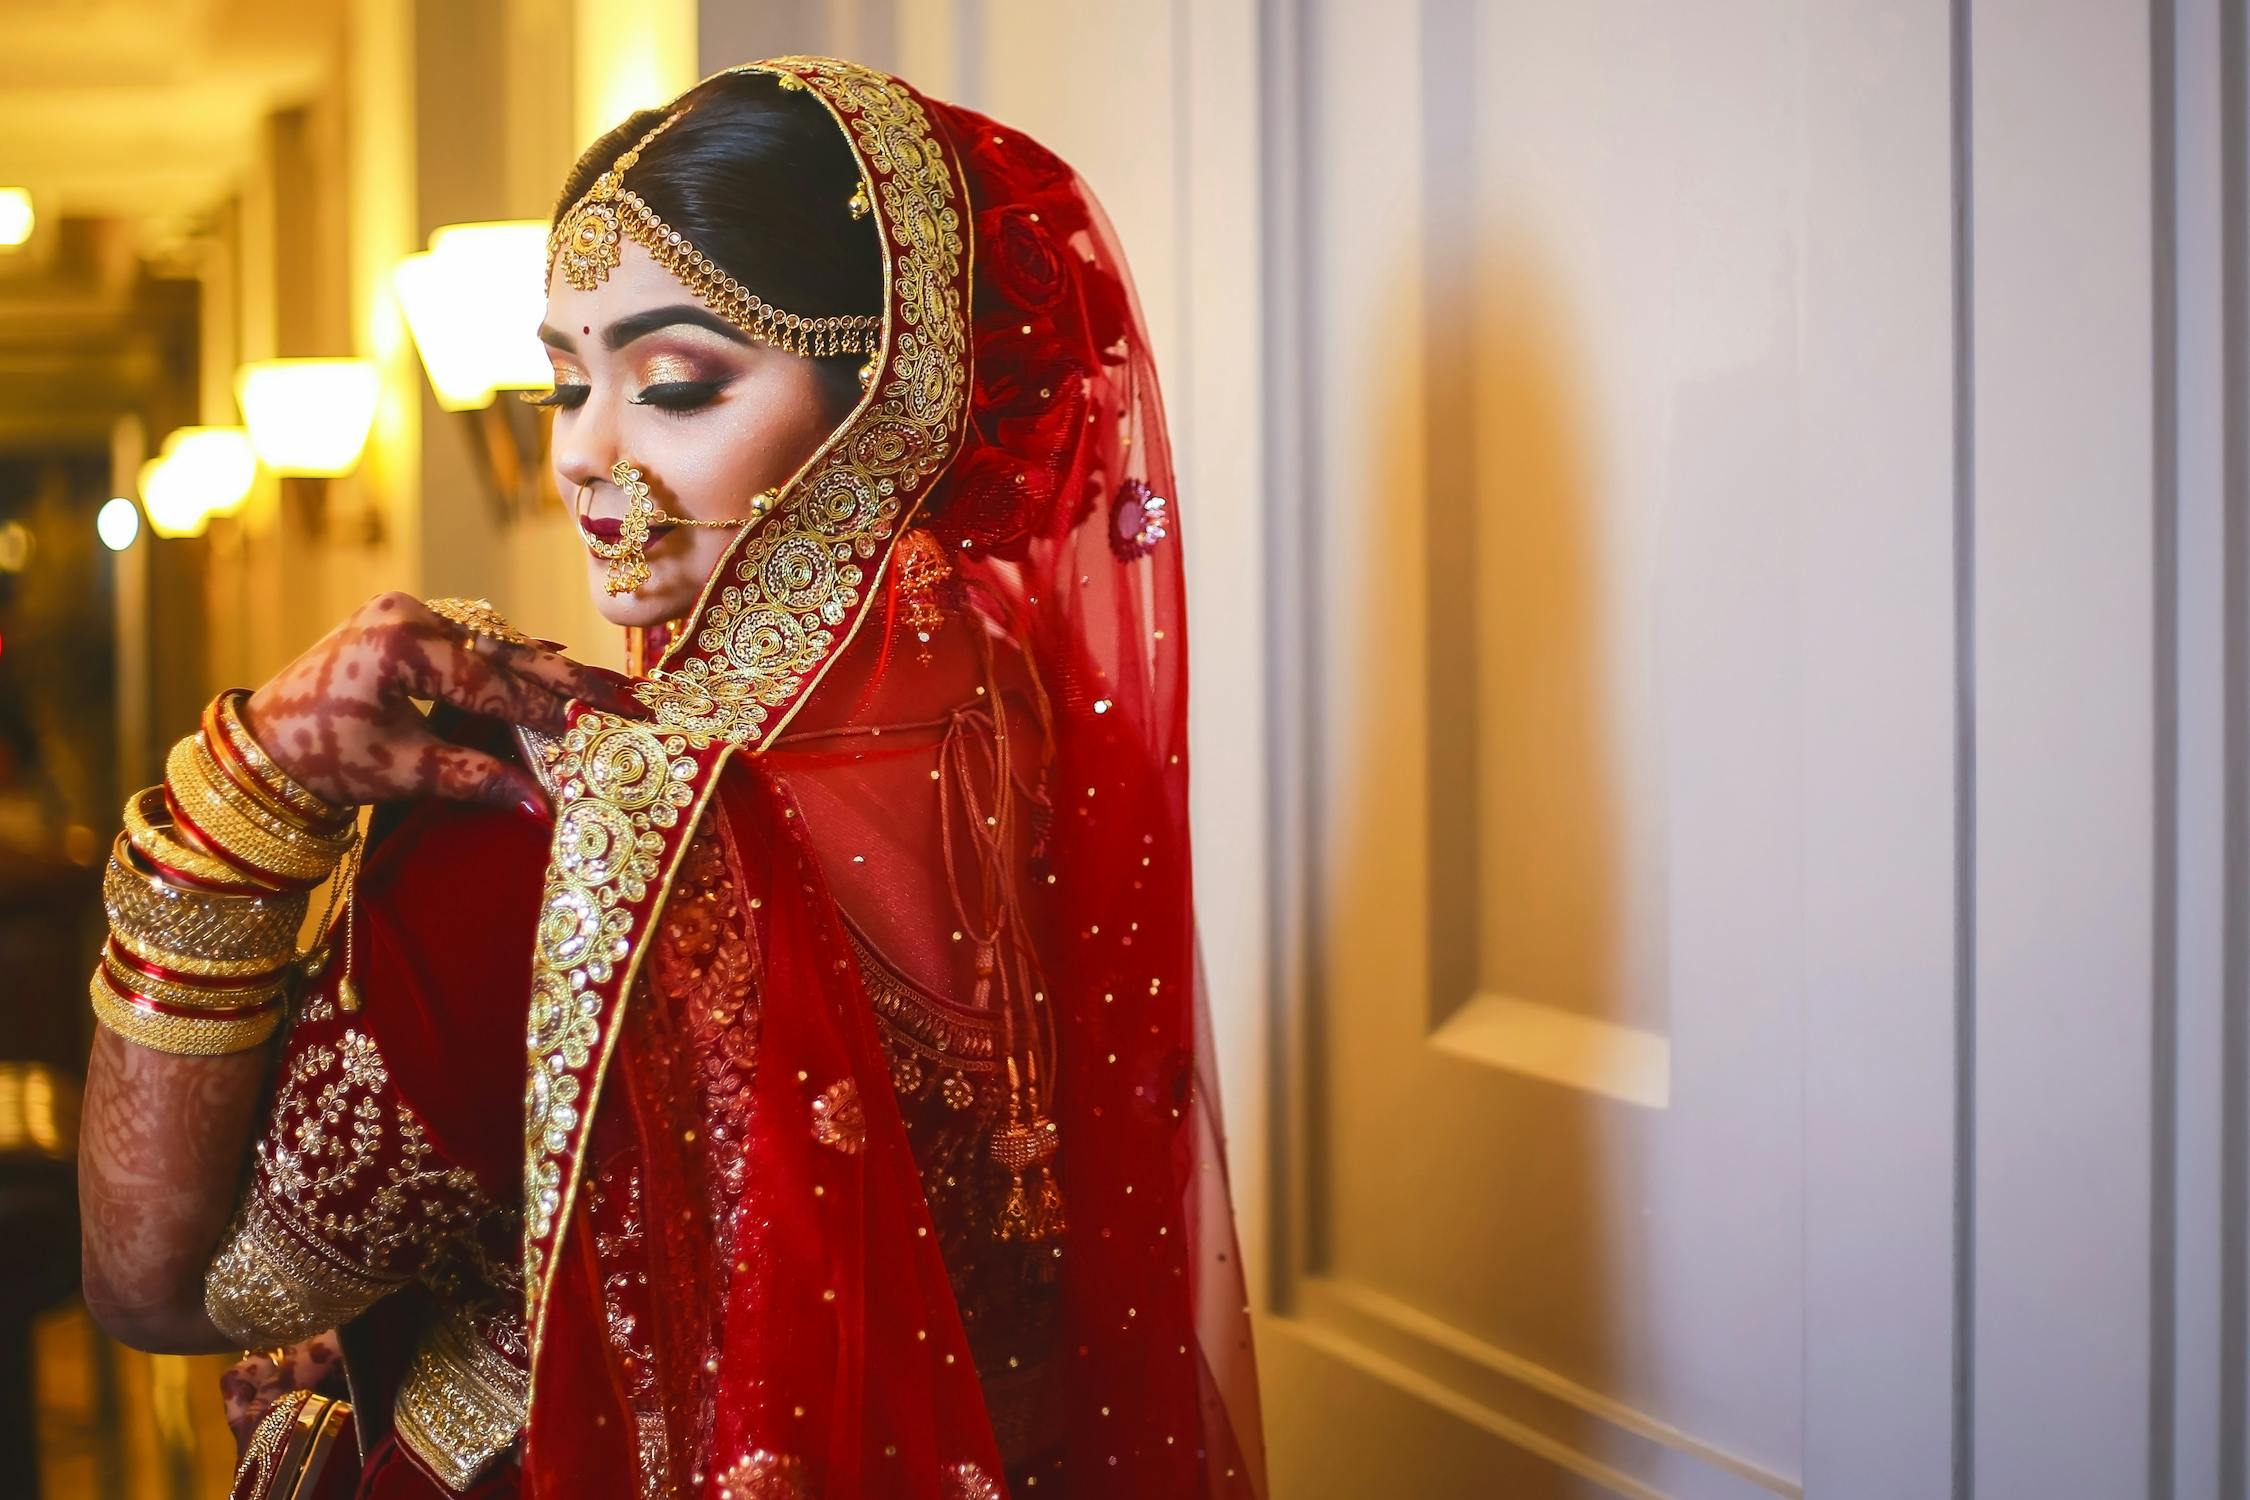 Indian Bride Photo by Farddin Protik from Pexels: https://www.pexels.com/photo/woman-in-floral-dress-standing-beside-door-2106463/